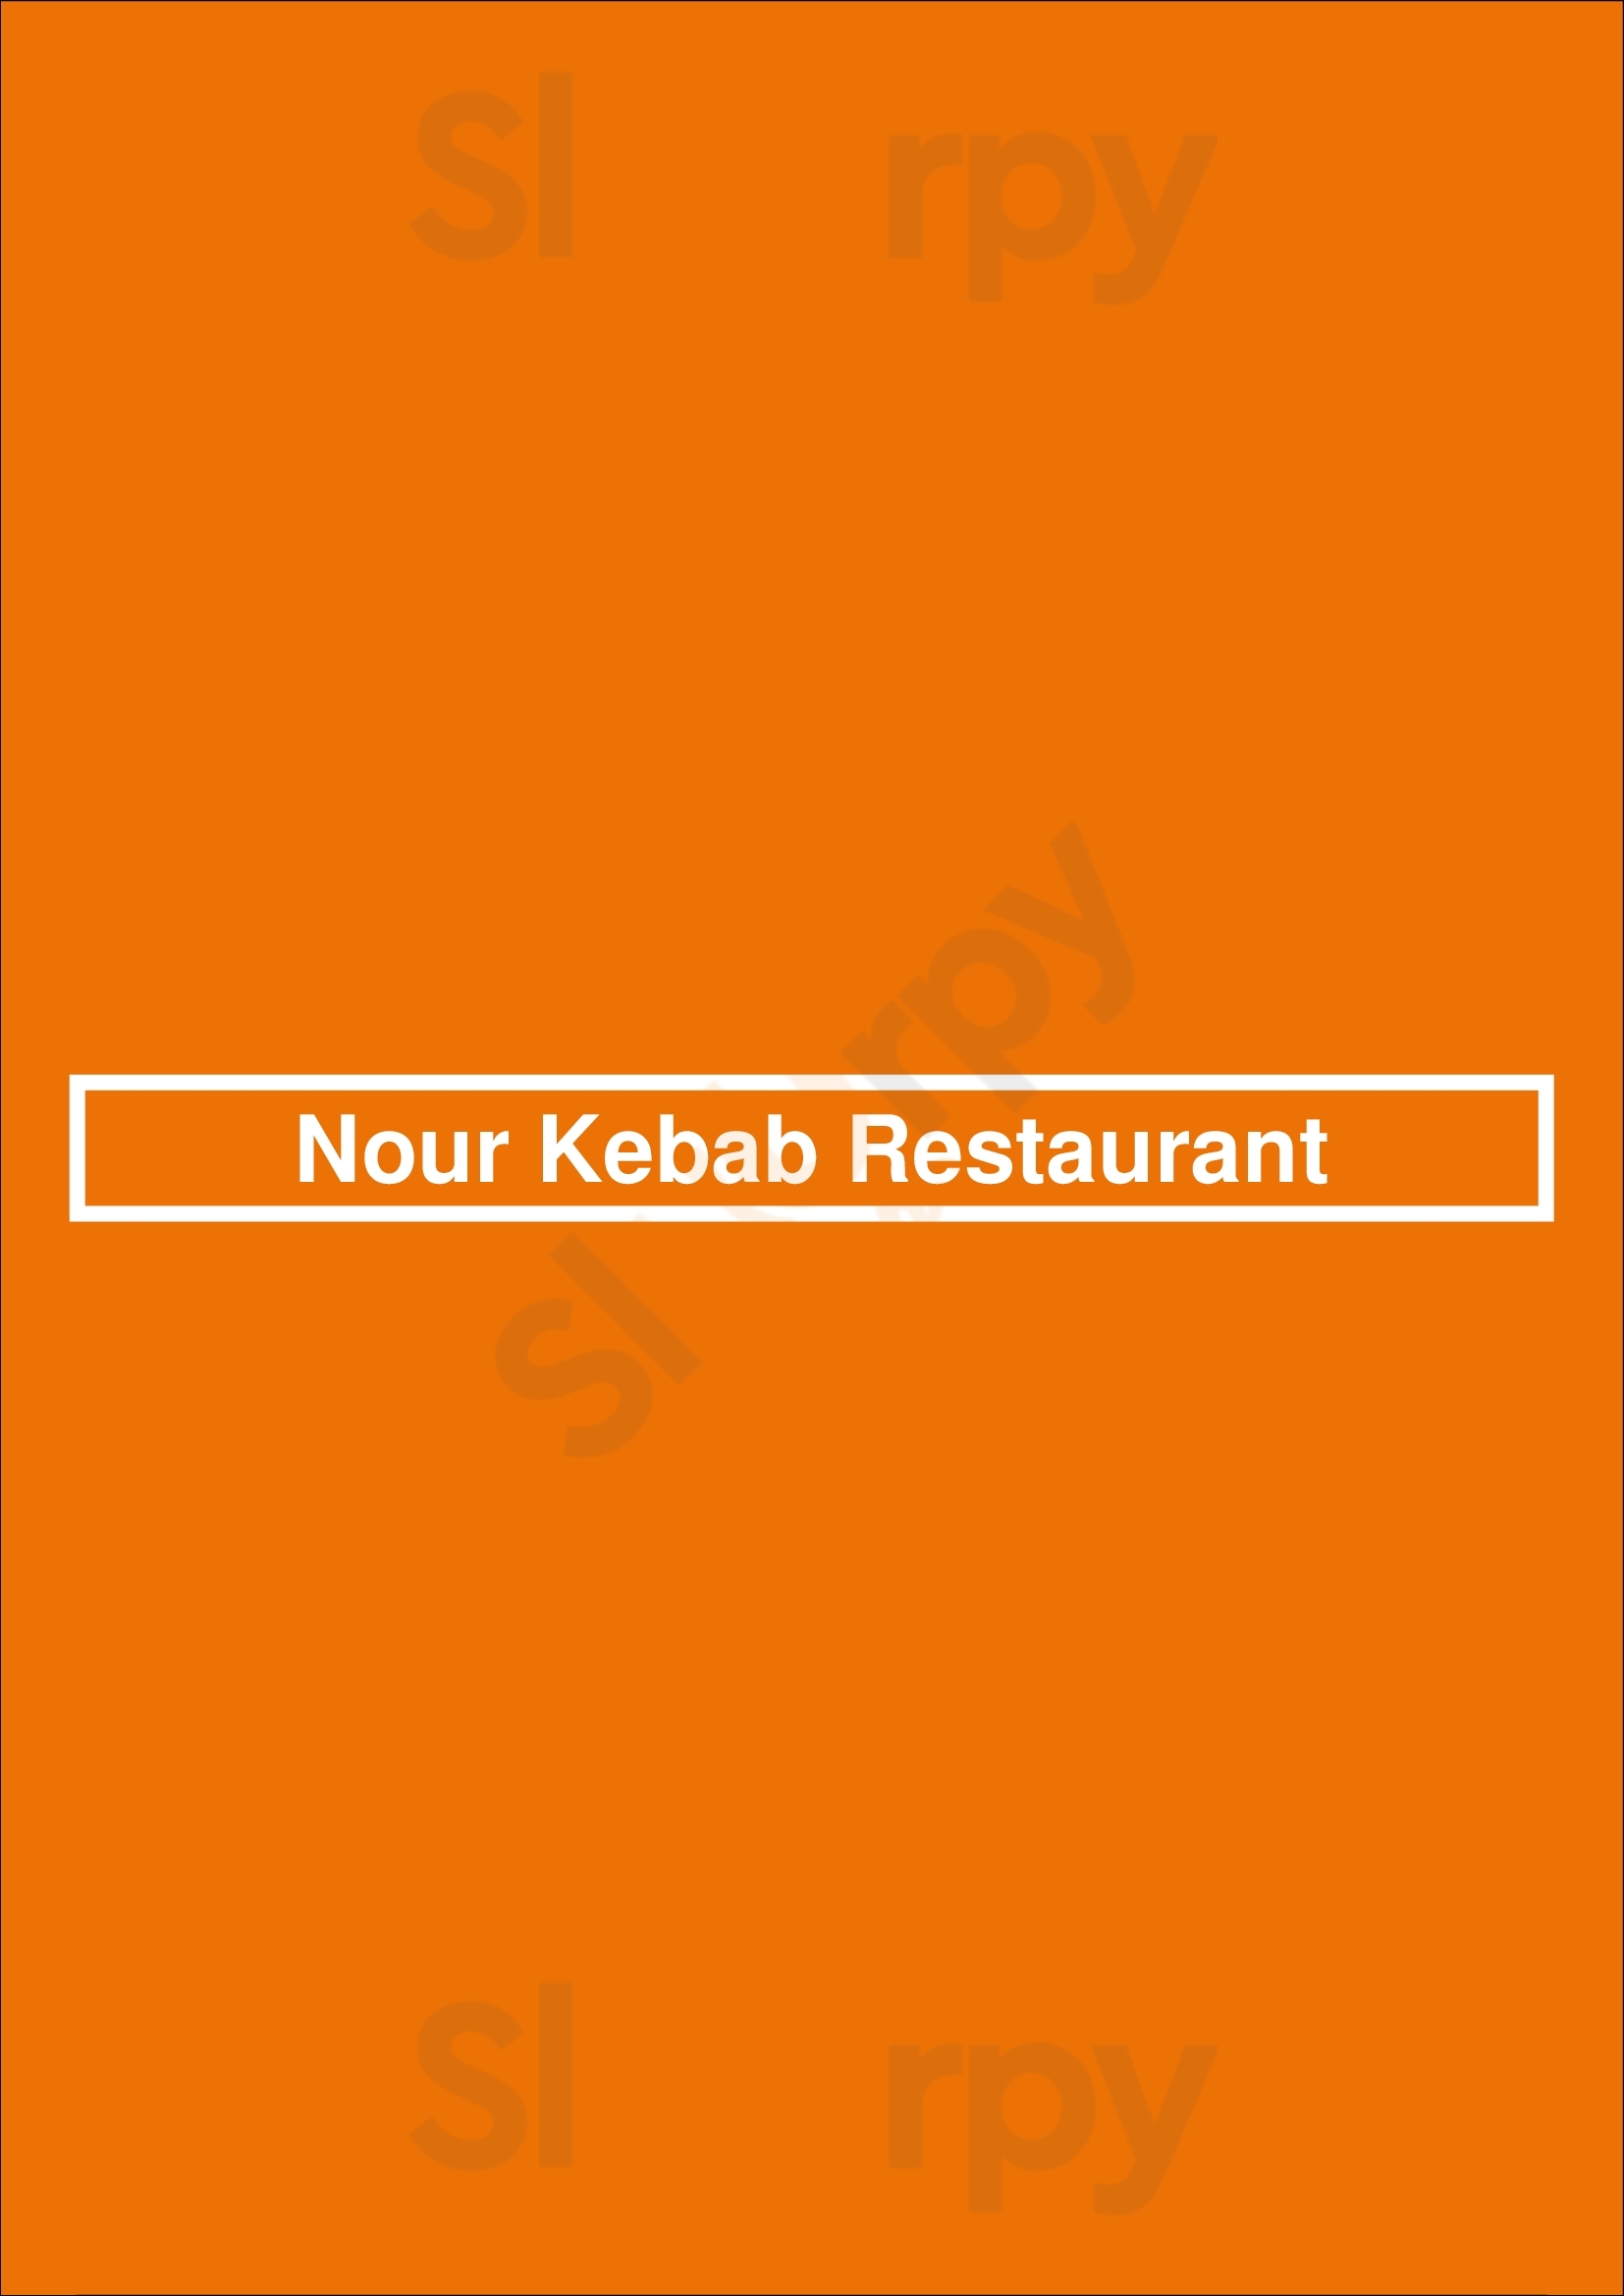 Nour Kebab Restaurant Amsterdam Menu - 1